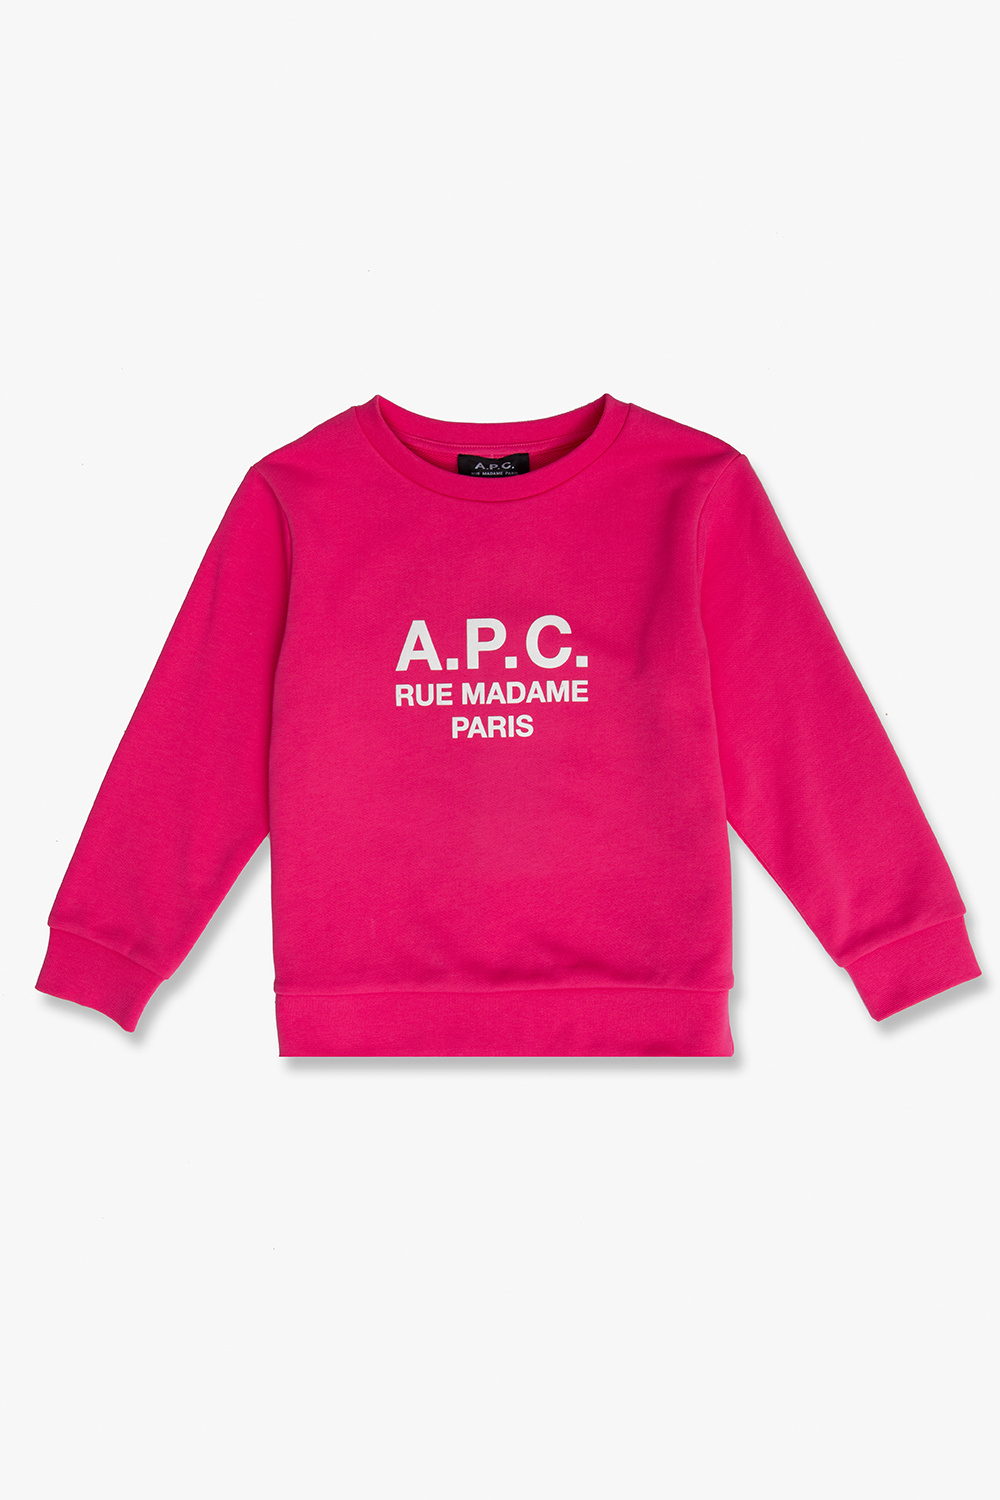 A.P.C. Kids champion reverse weave script logo coach jacket